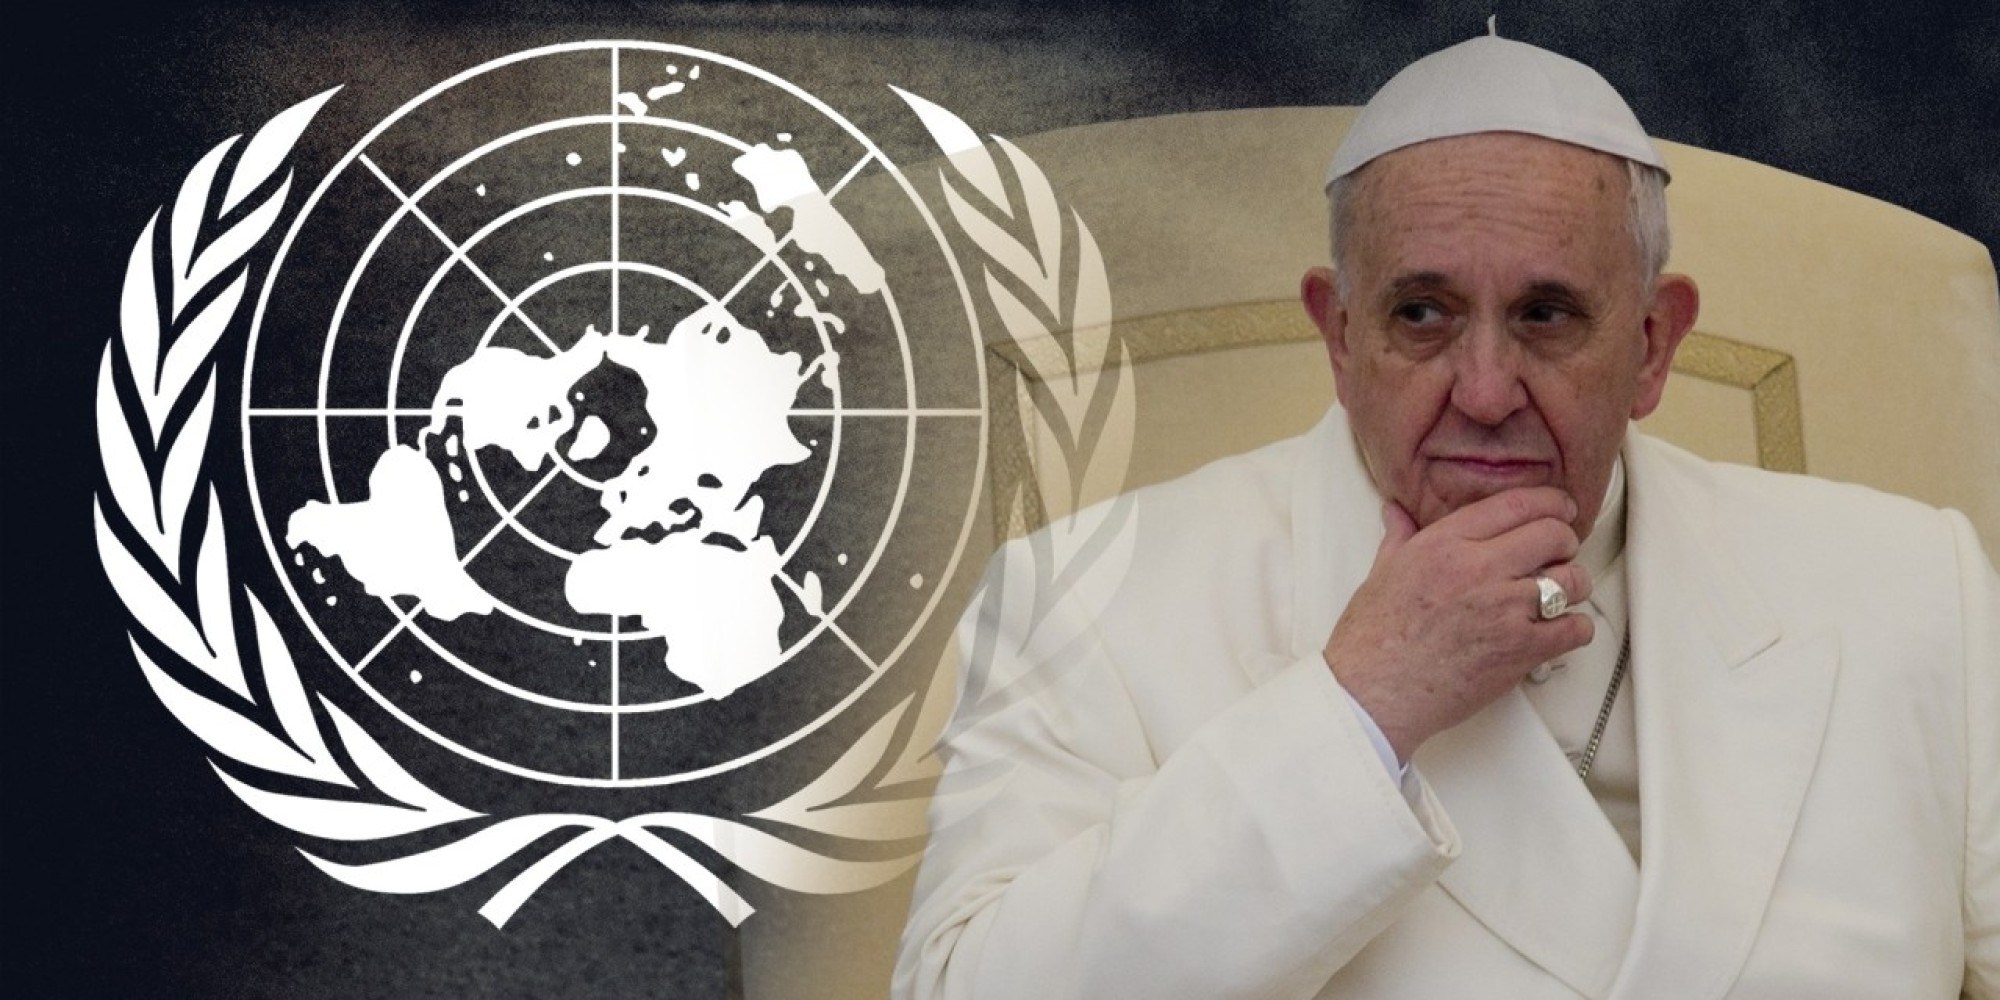 'Mega' Agenda 21 resurrected with pope's help